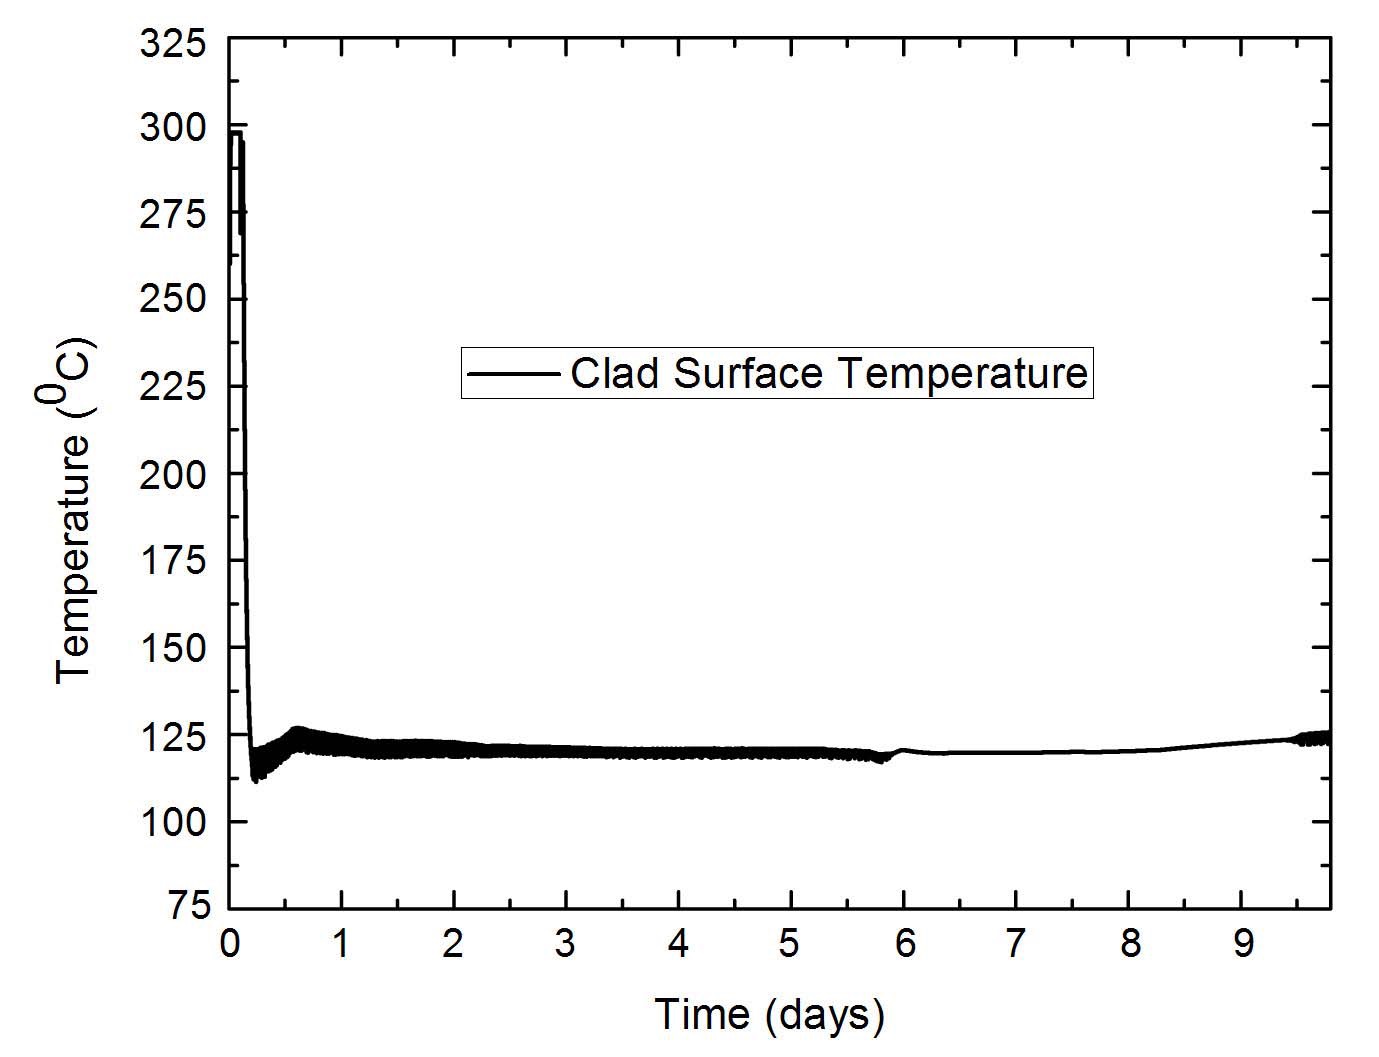 Maximum Clad Surface Temperature during Fukushima-like Accident